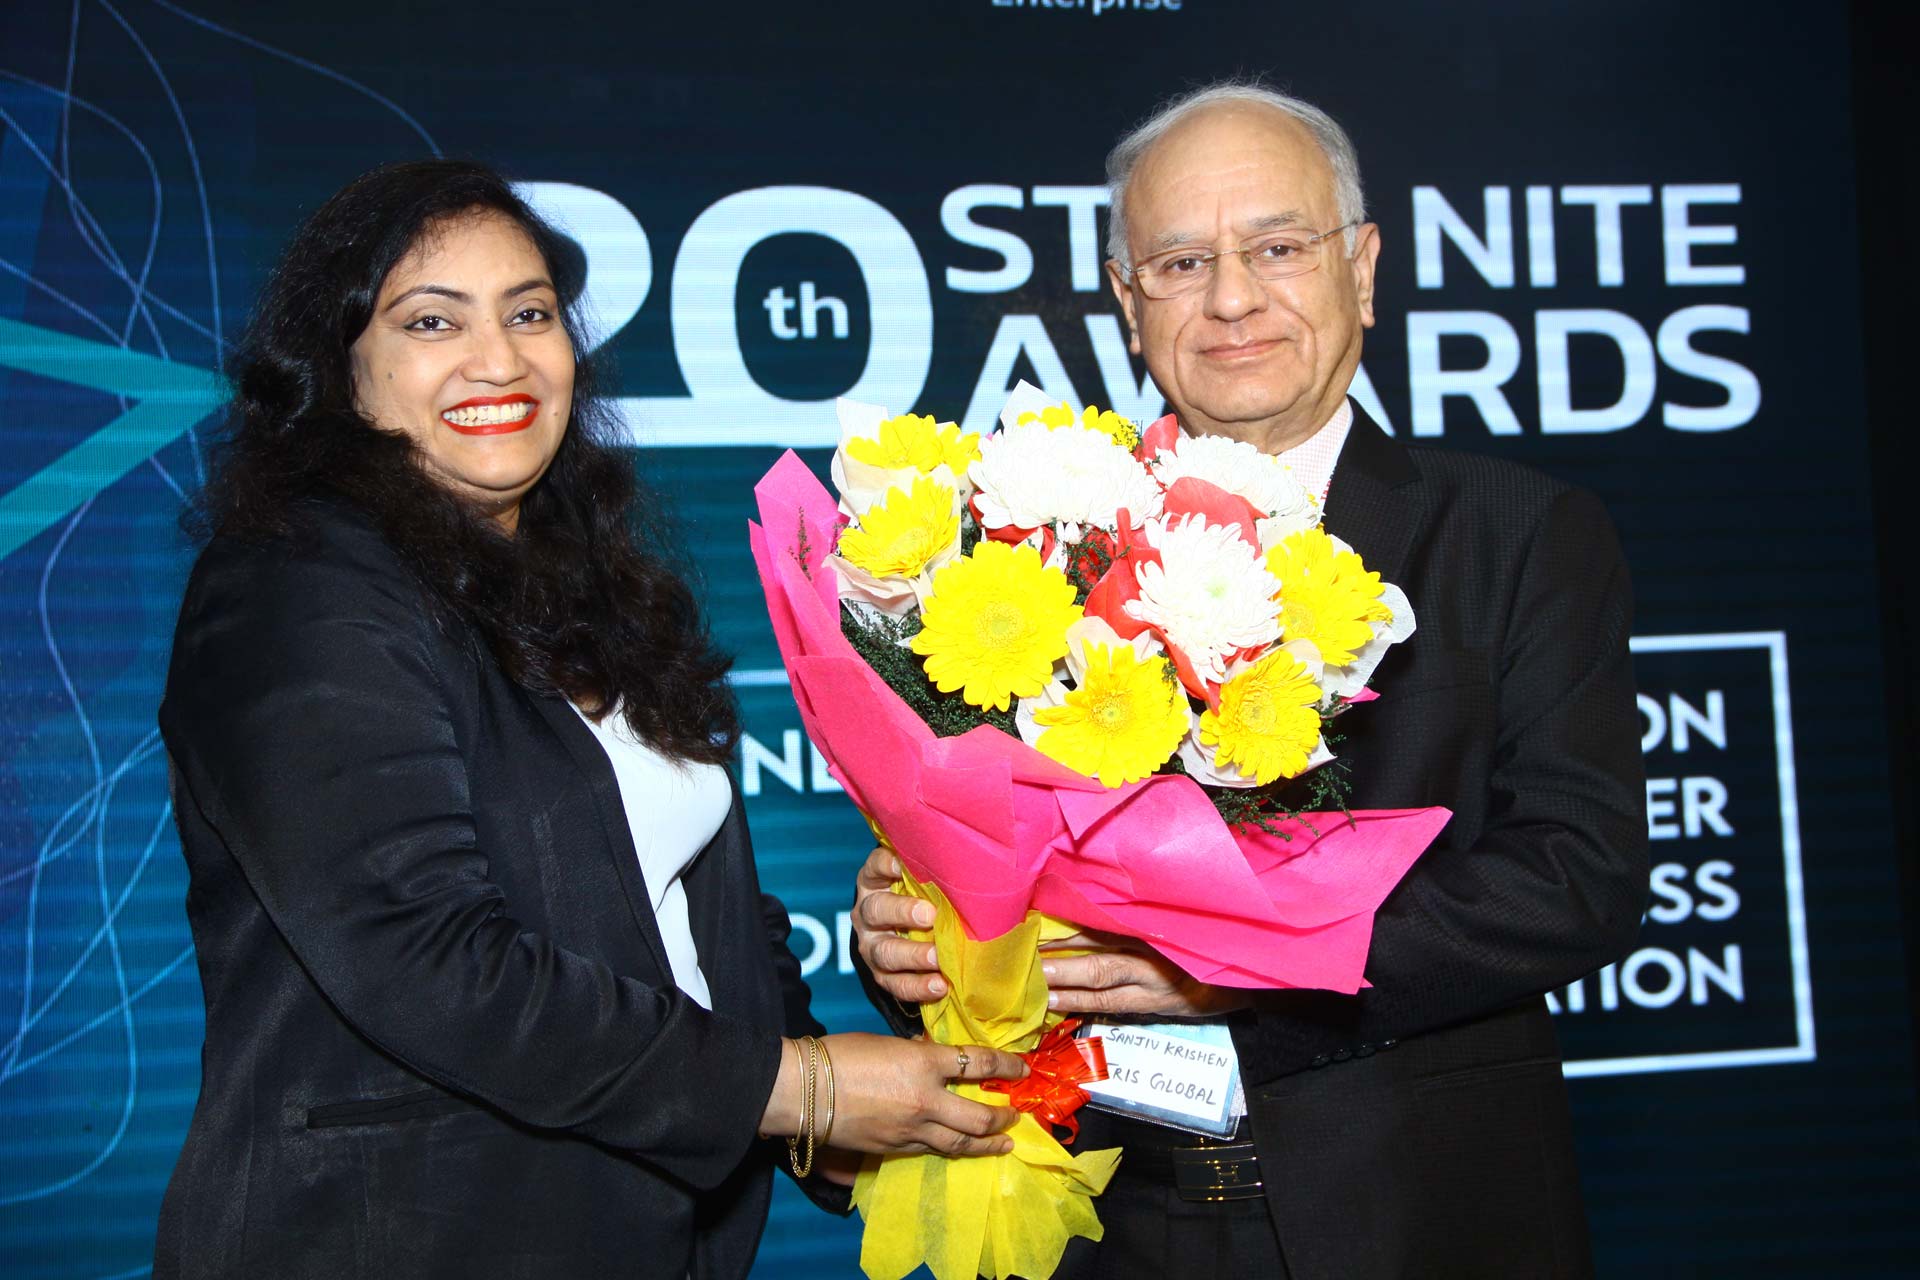 Welcoming Mr. Sanjiv Krishen, Chairman - IRIS Global Services Pvt. Ltd. at 20th Star Nite Awards 2021